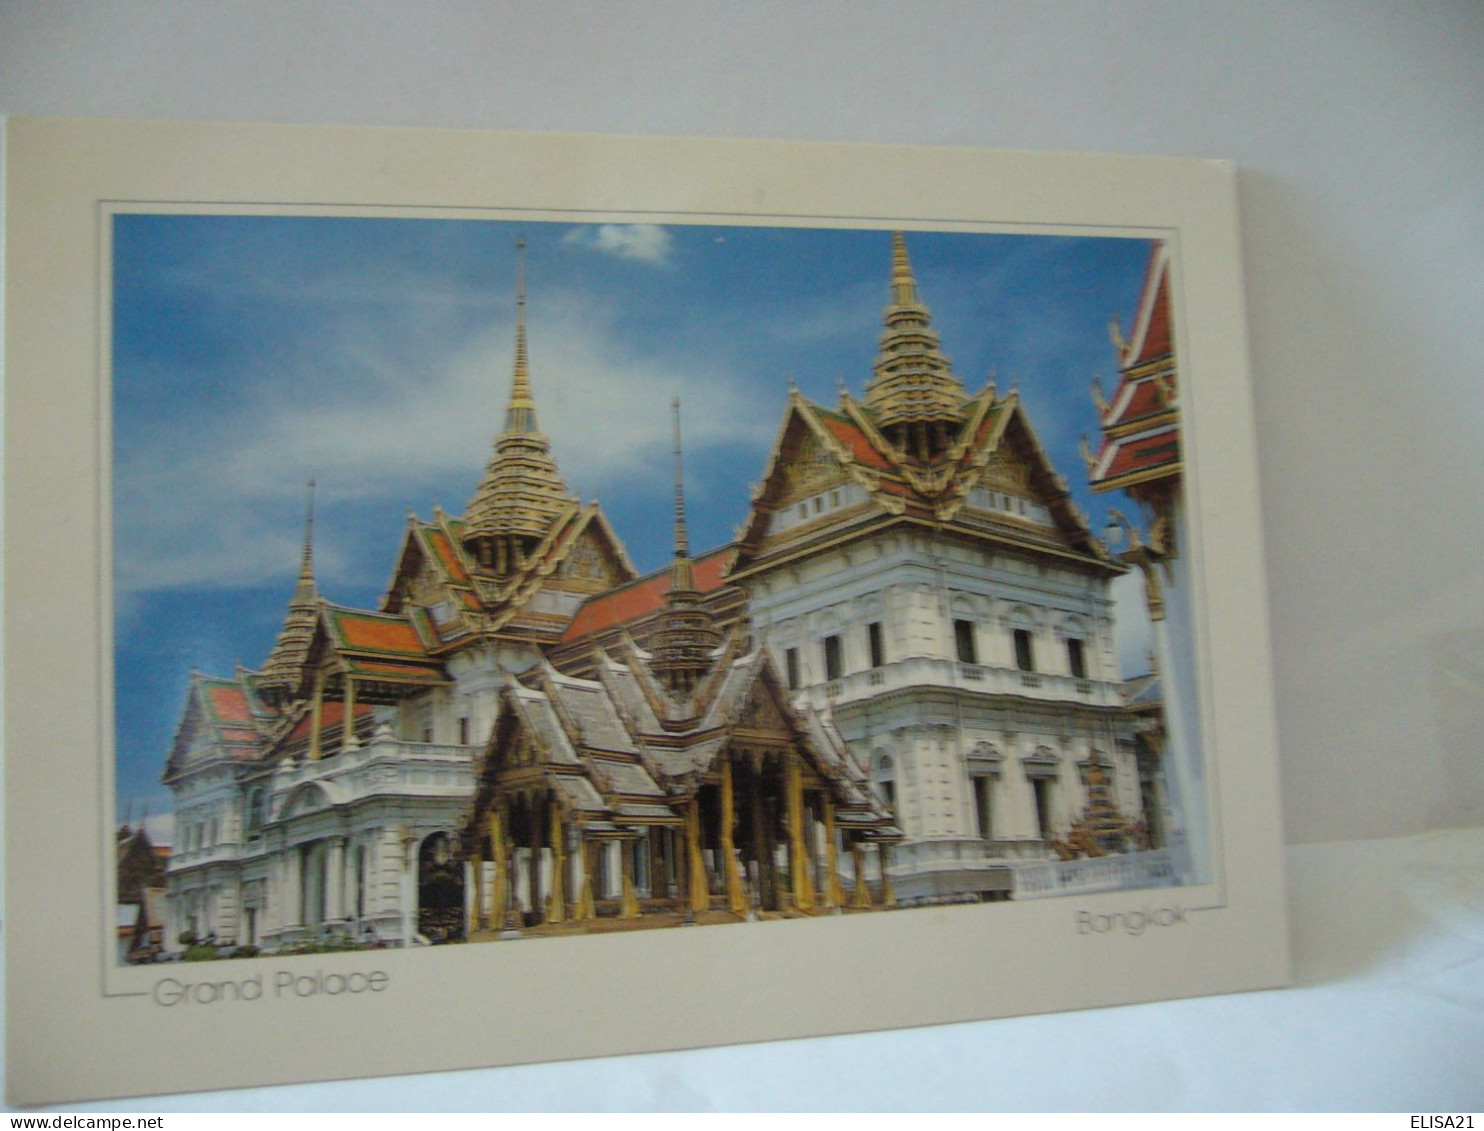 GRAND PALACE BANGKOK THAILANDE ASIA ASIE CPM - Thaïlande